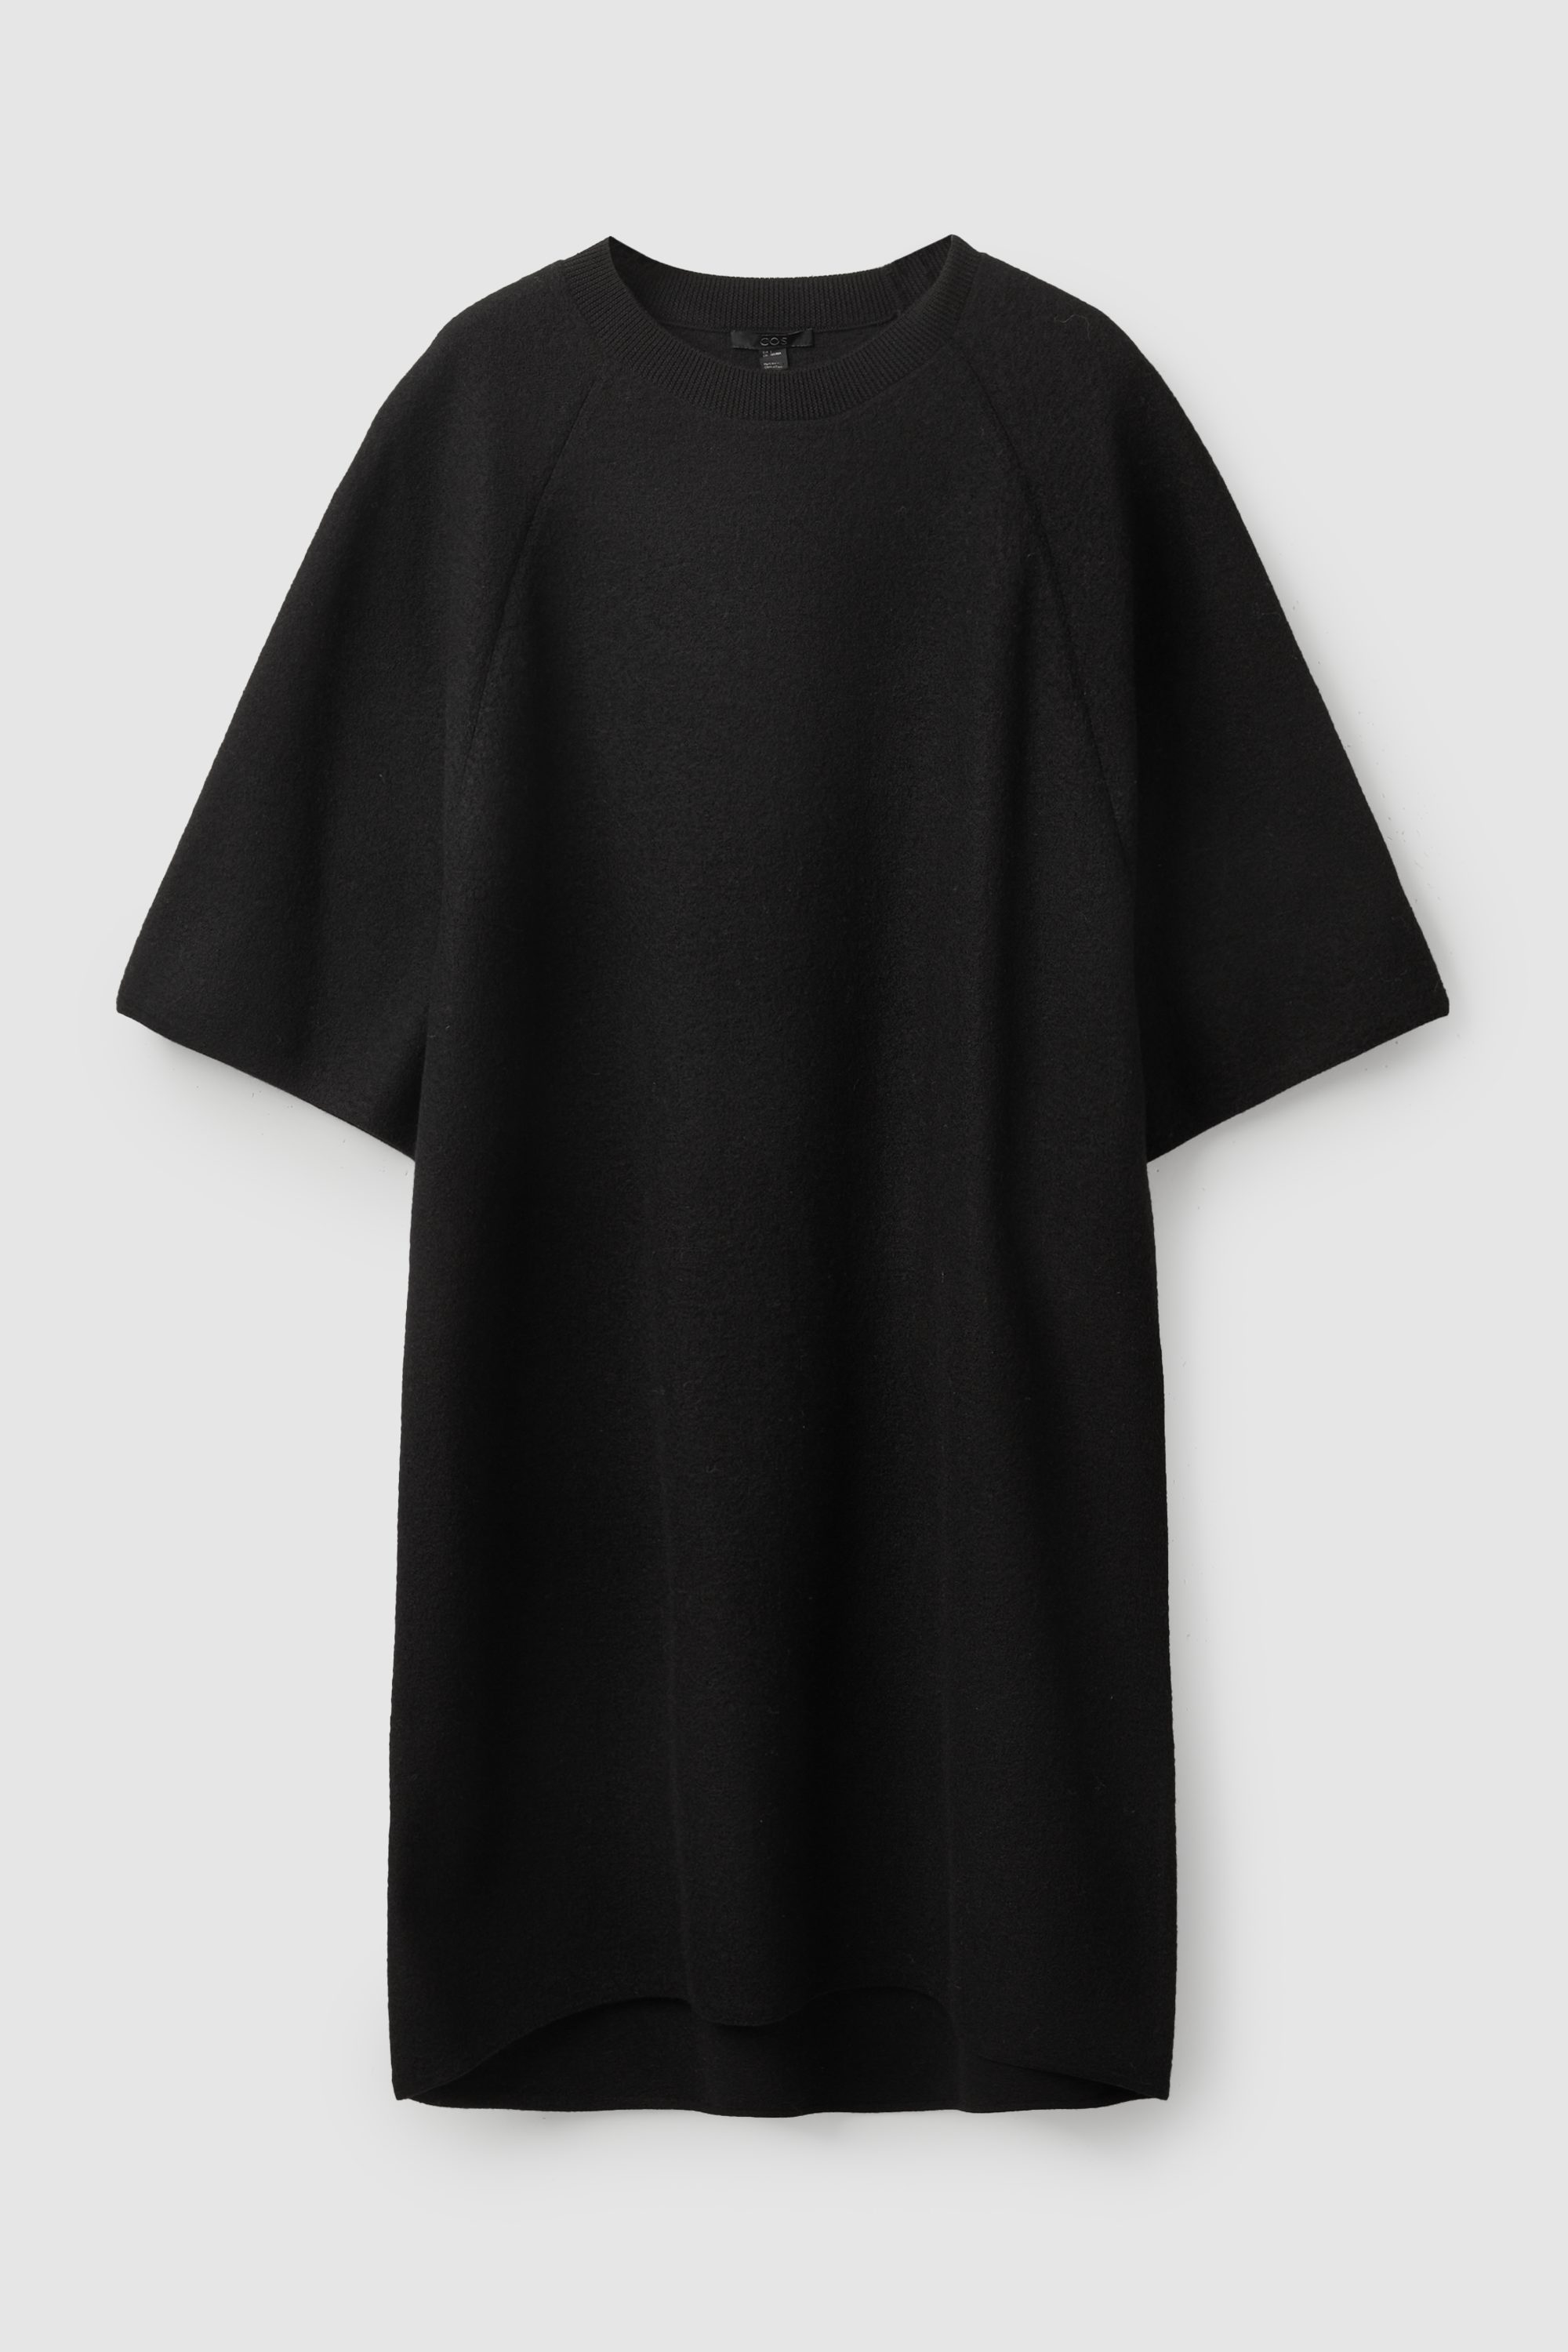 COS Oversized T-Shirt Dress in Black